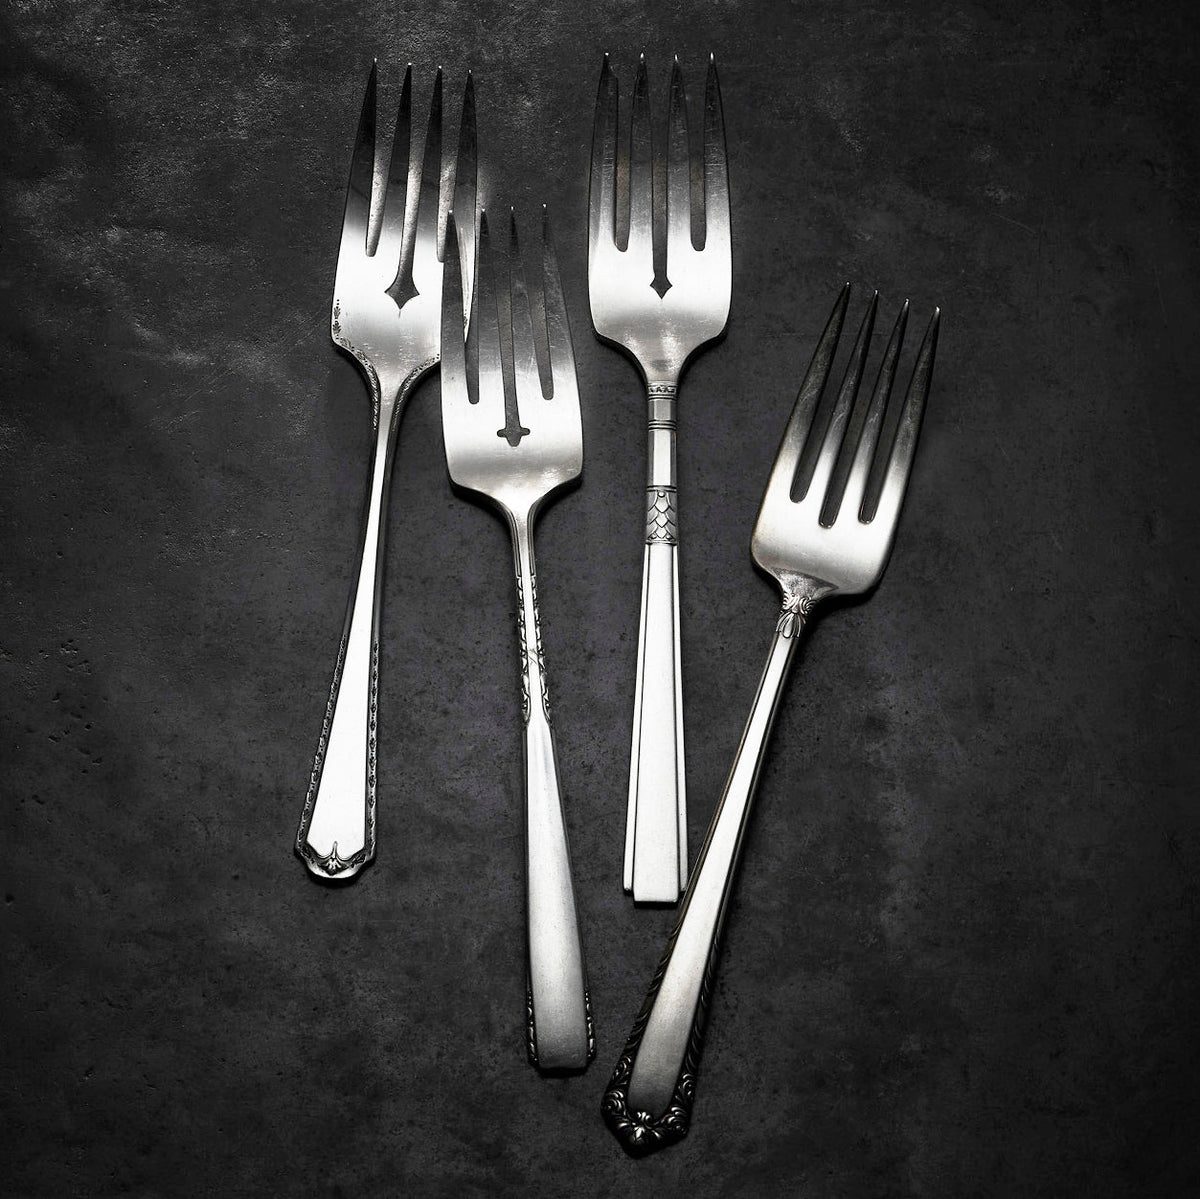 Three Brimfield Vintage Salad Forks by Caskata on a black surface.